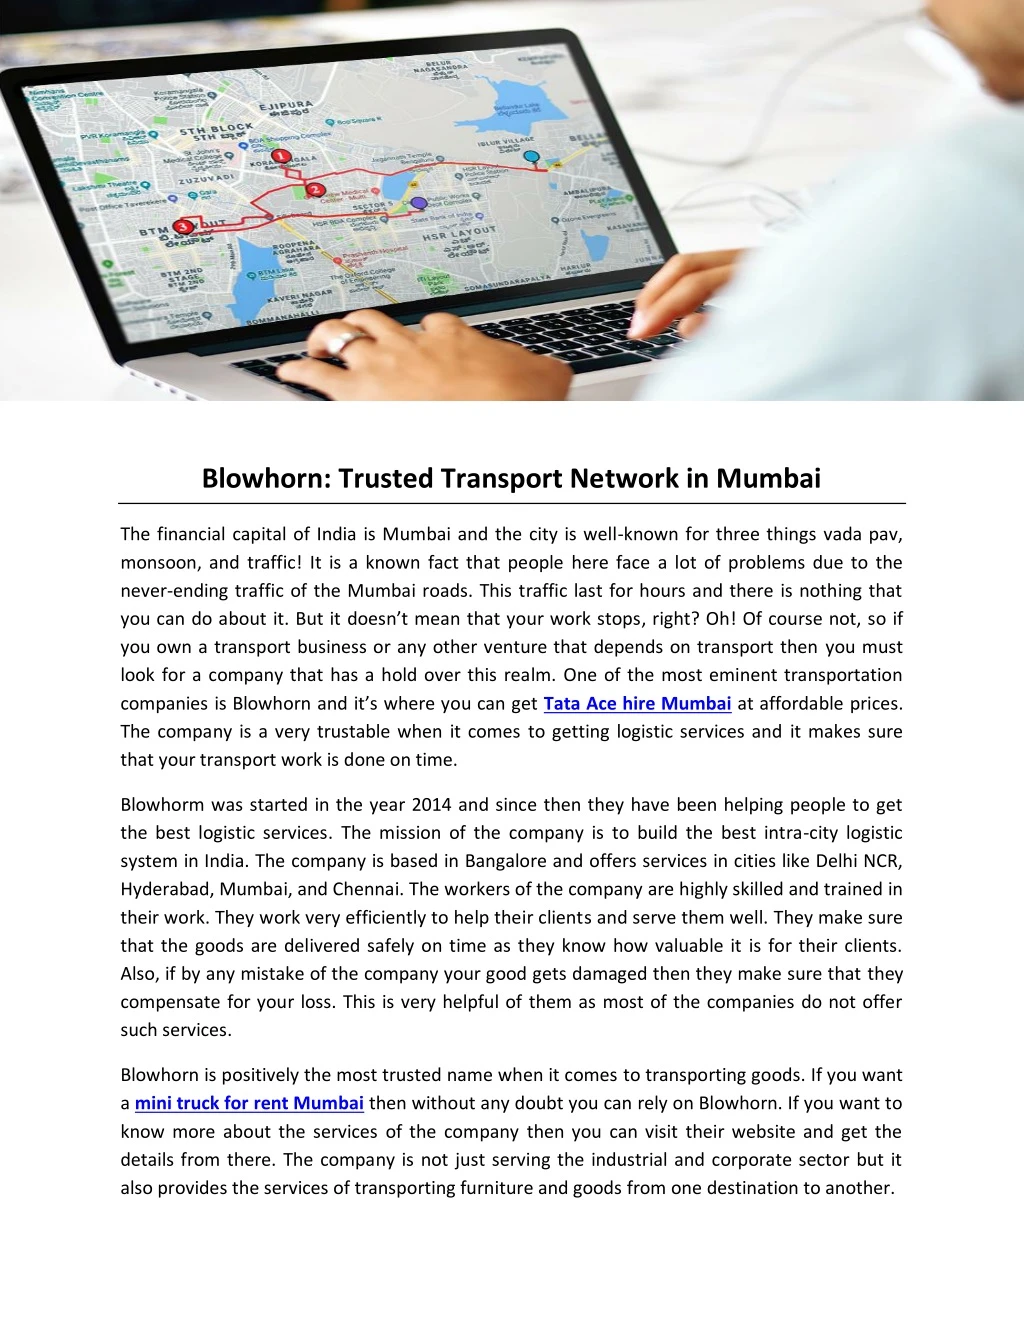 blowhorn trusted transport network in mumbai